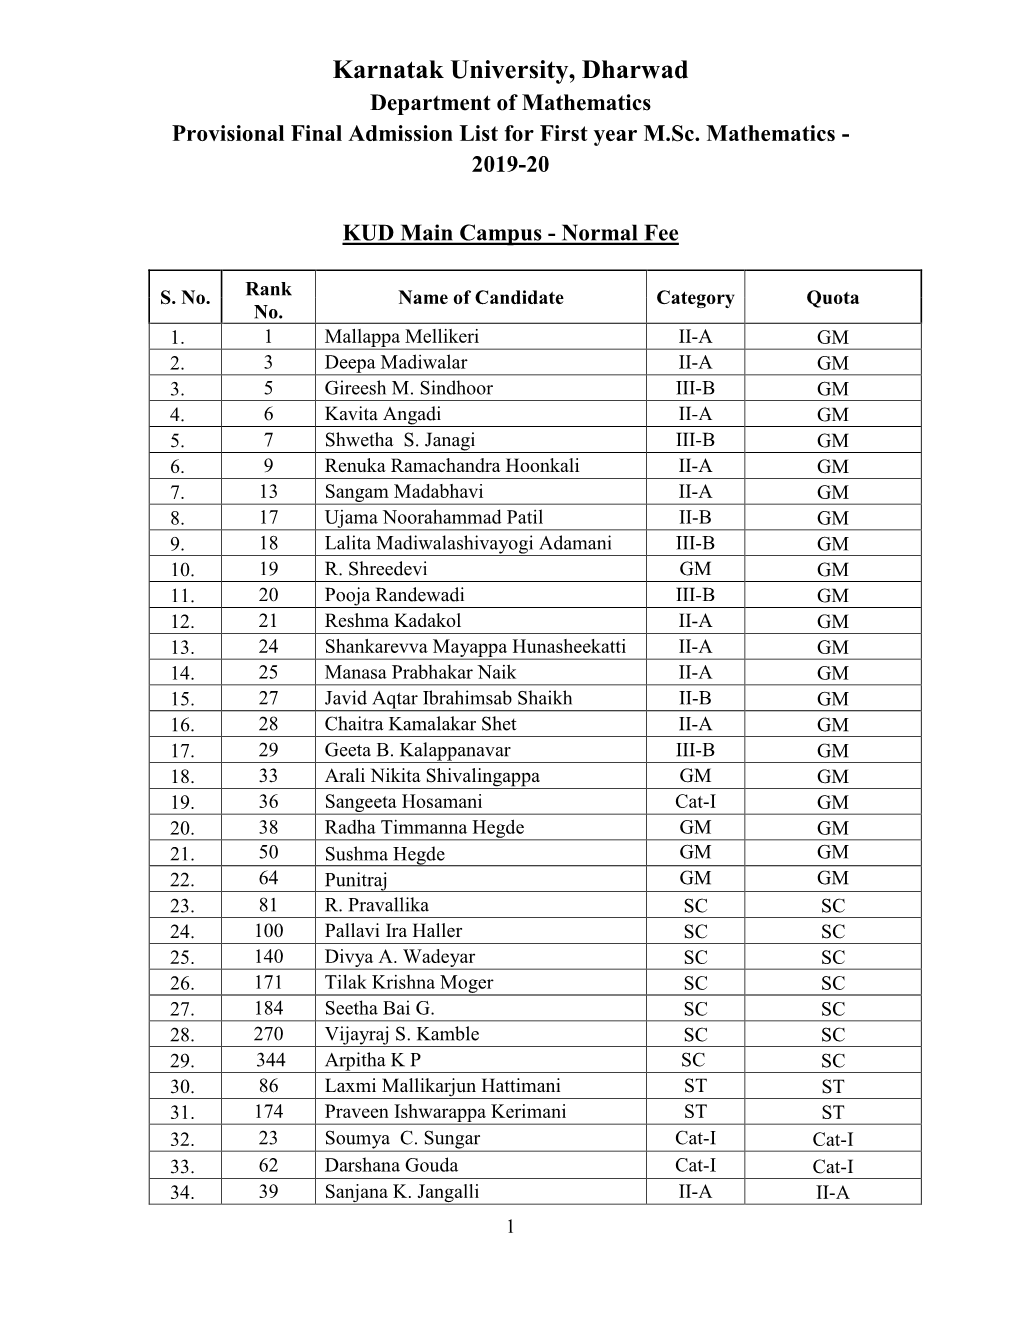 Karnatak University, Dharwad Department of Mathematics Provisional Final Admission List for First Year M.Sc